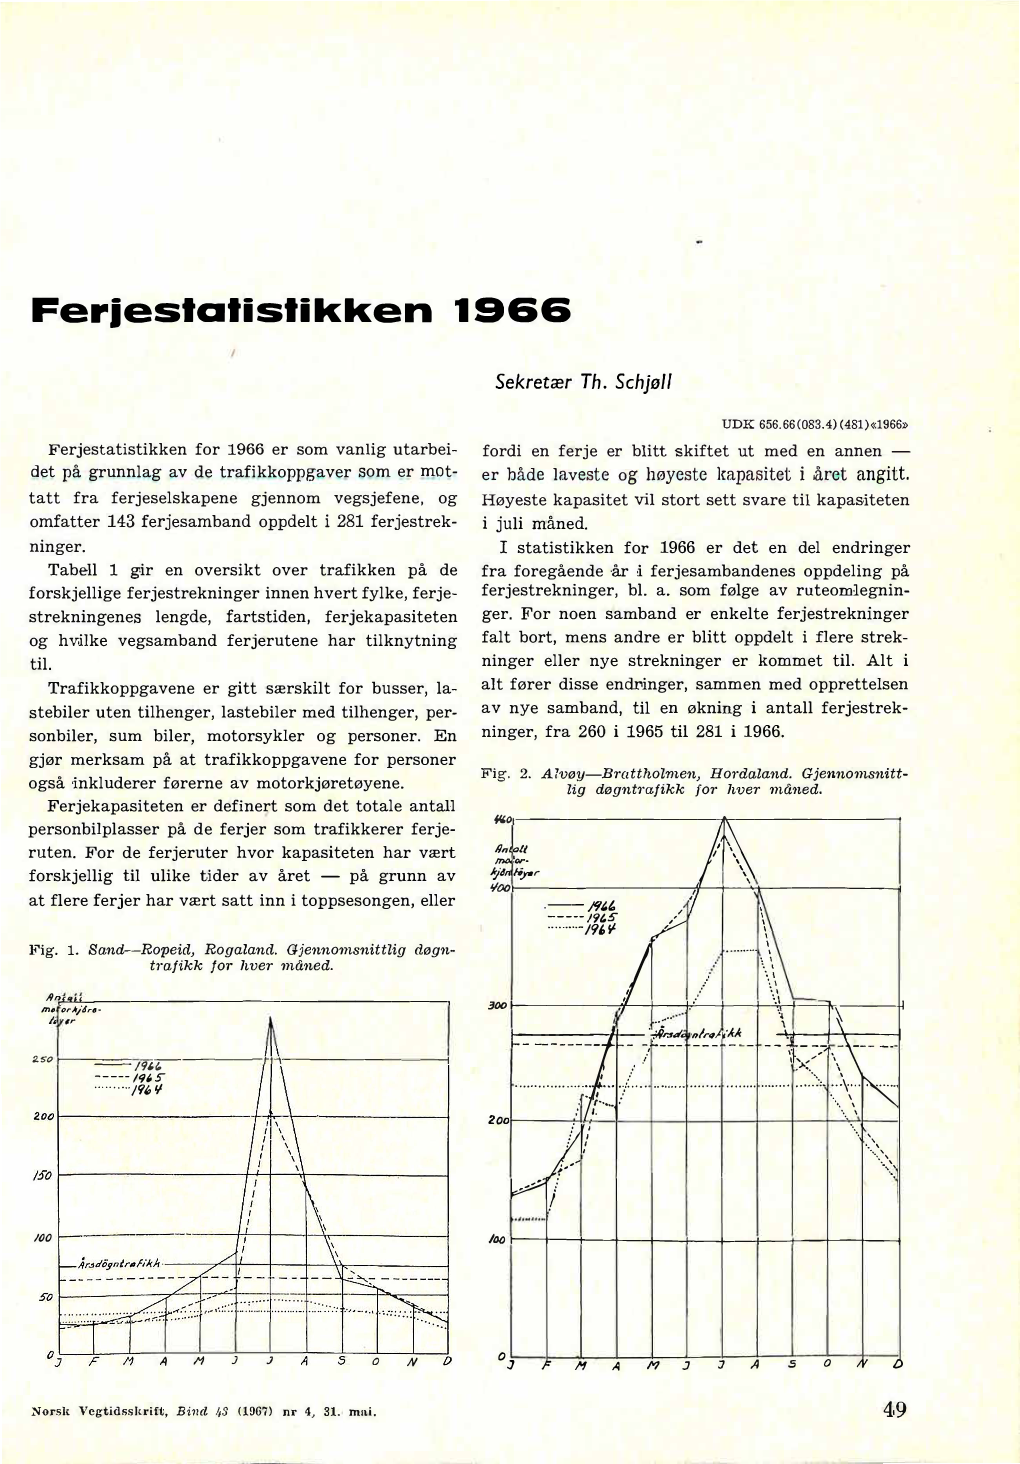 Feriestatistikken 1966